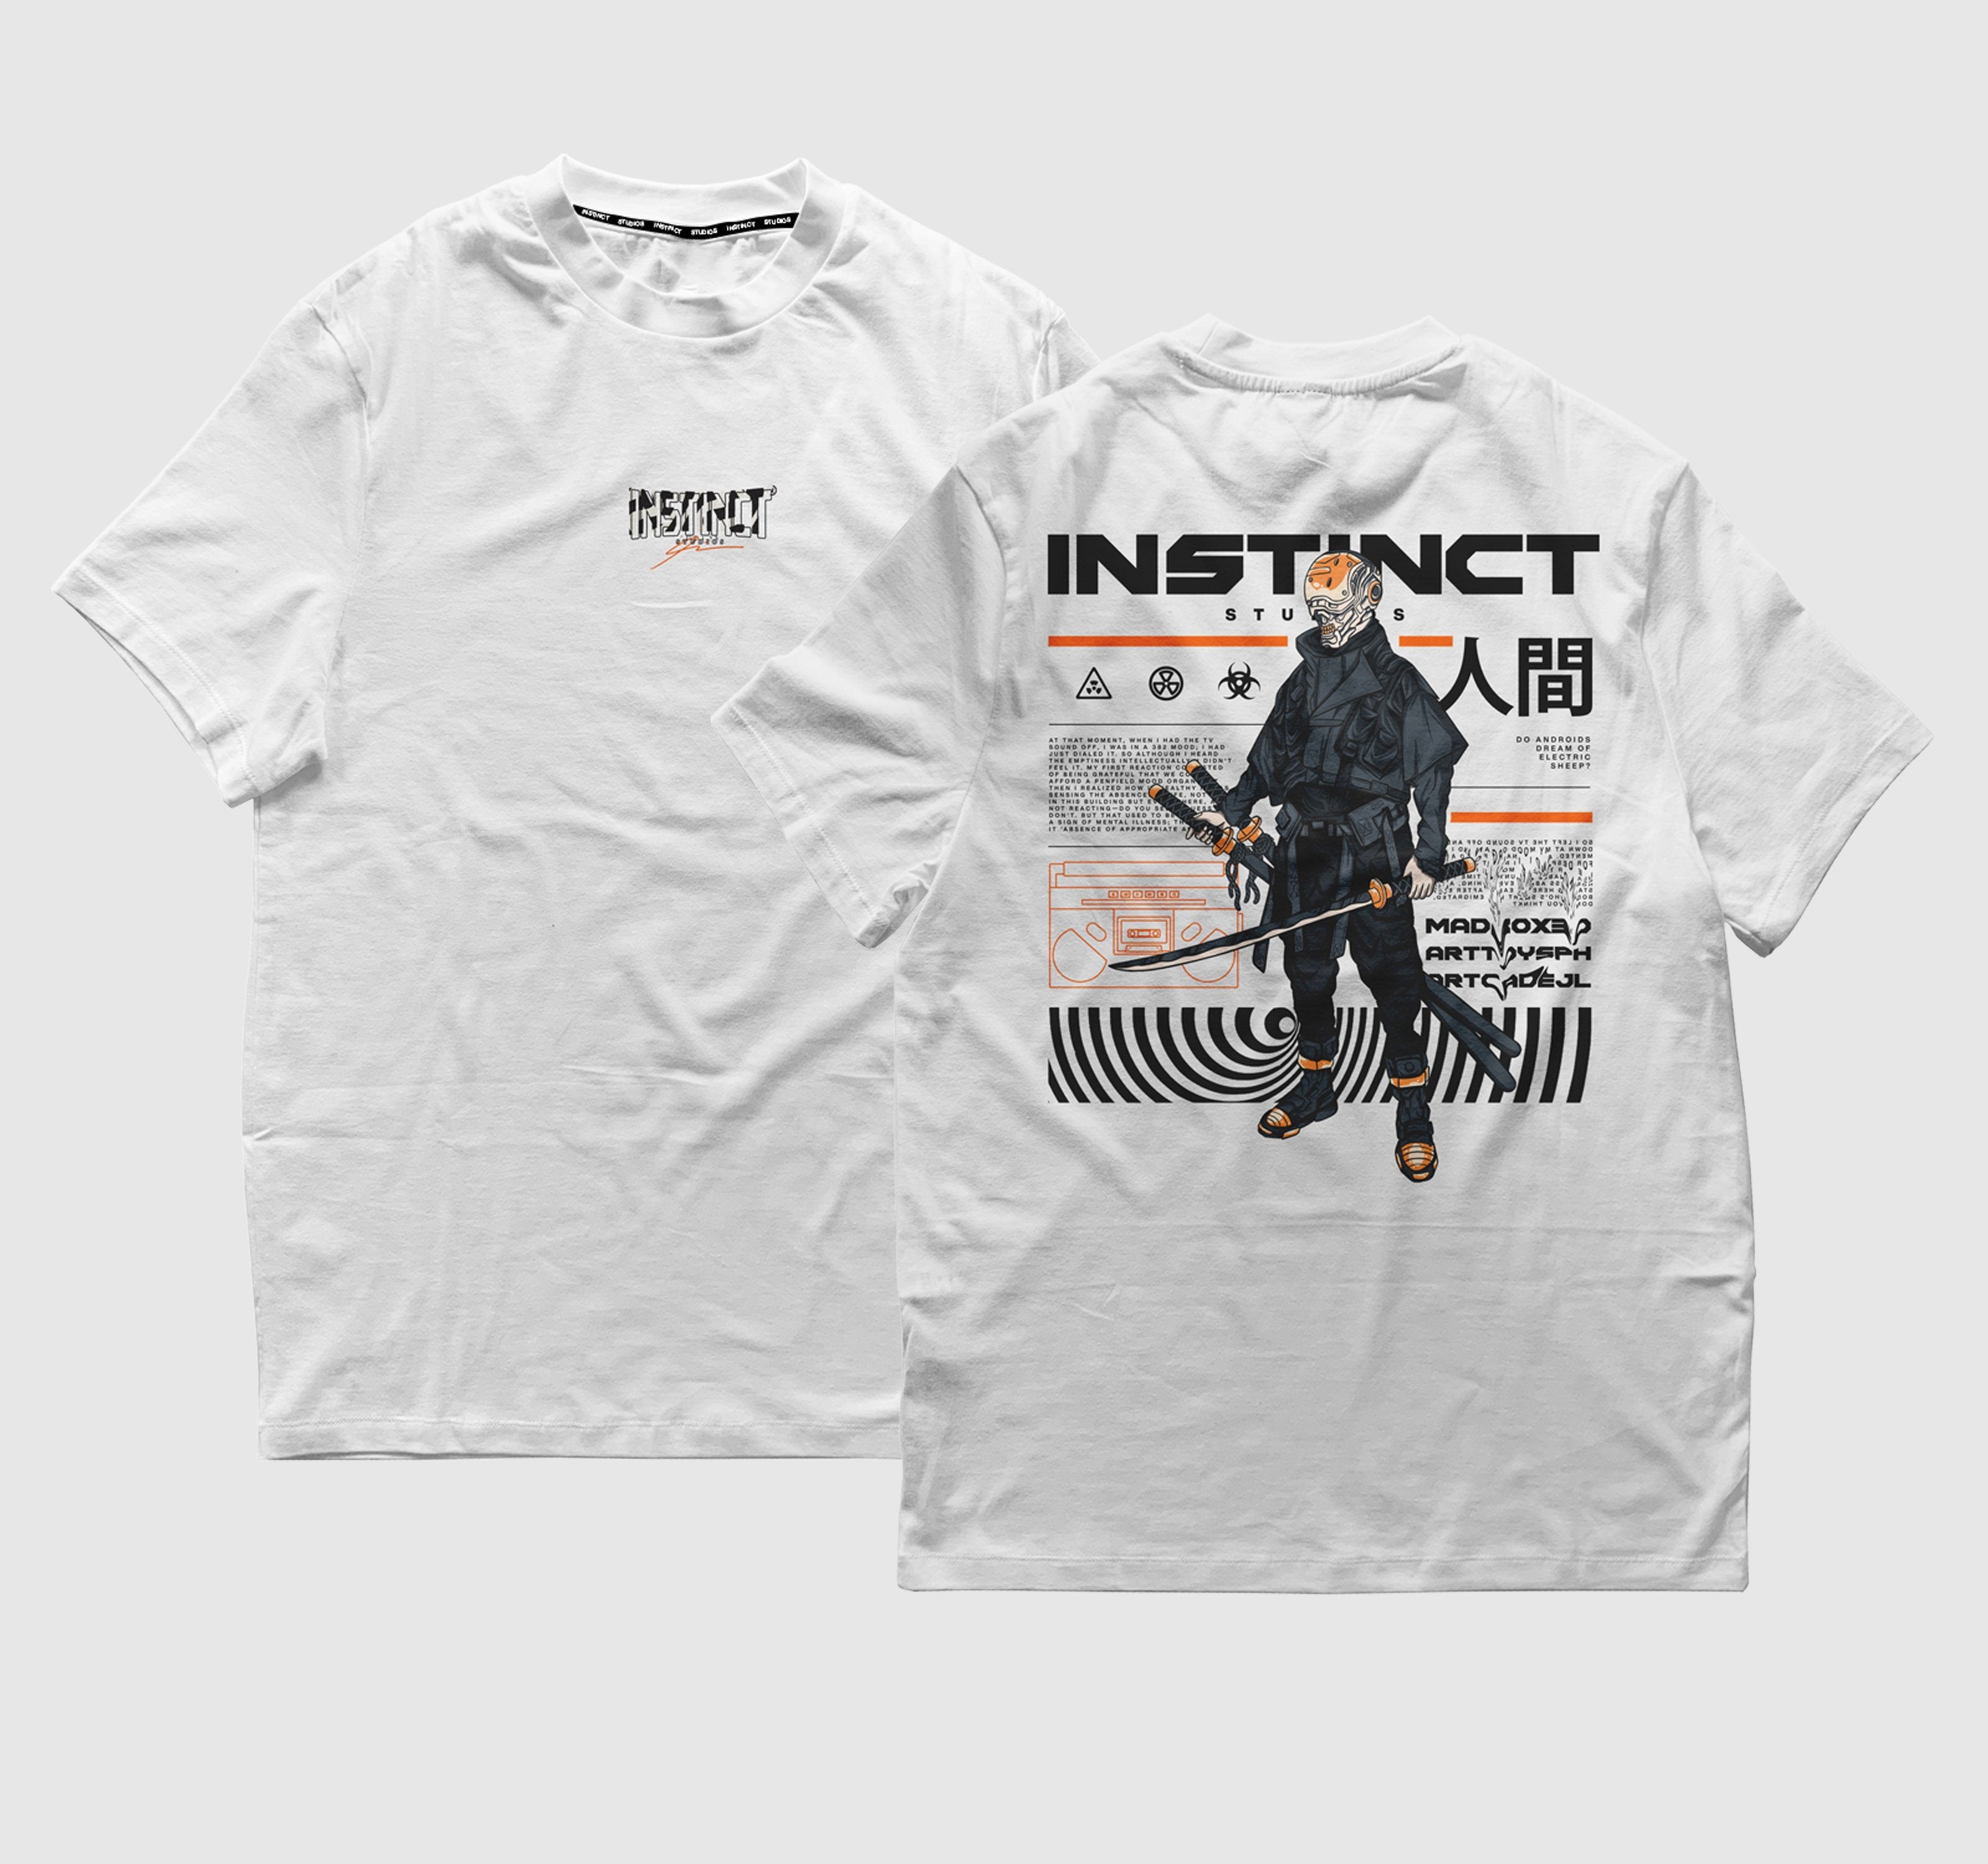 Bladerunner [Artcade JL x Instinct Studios] Shirt Instinct Studios 